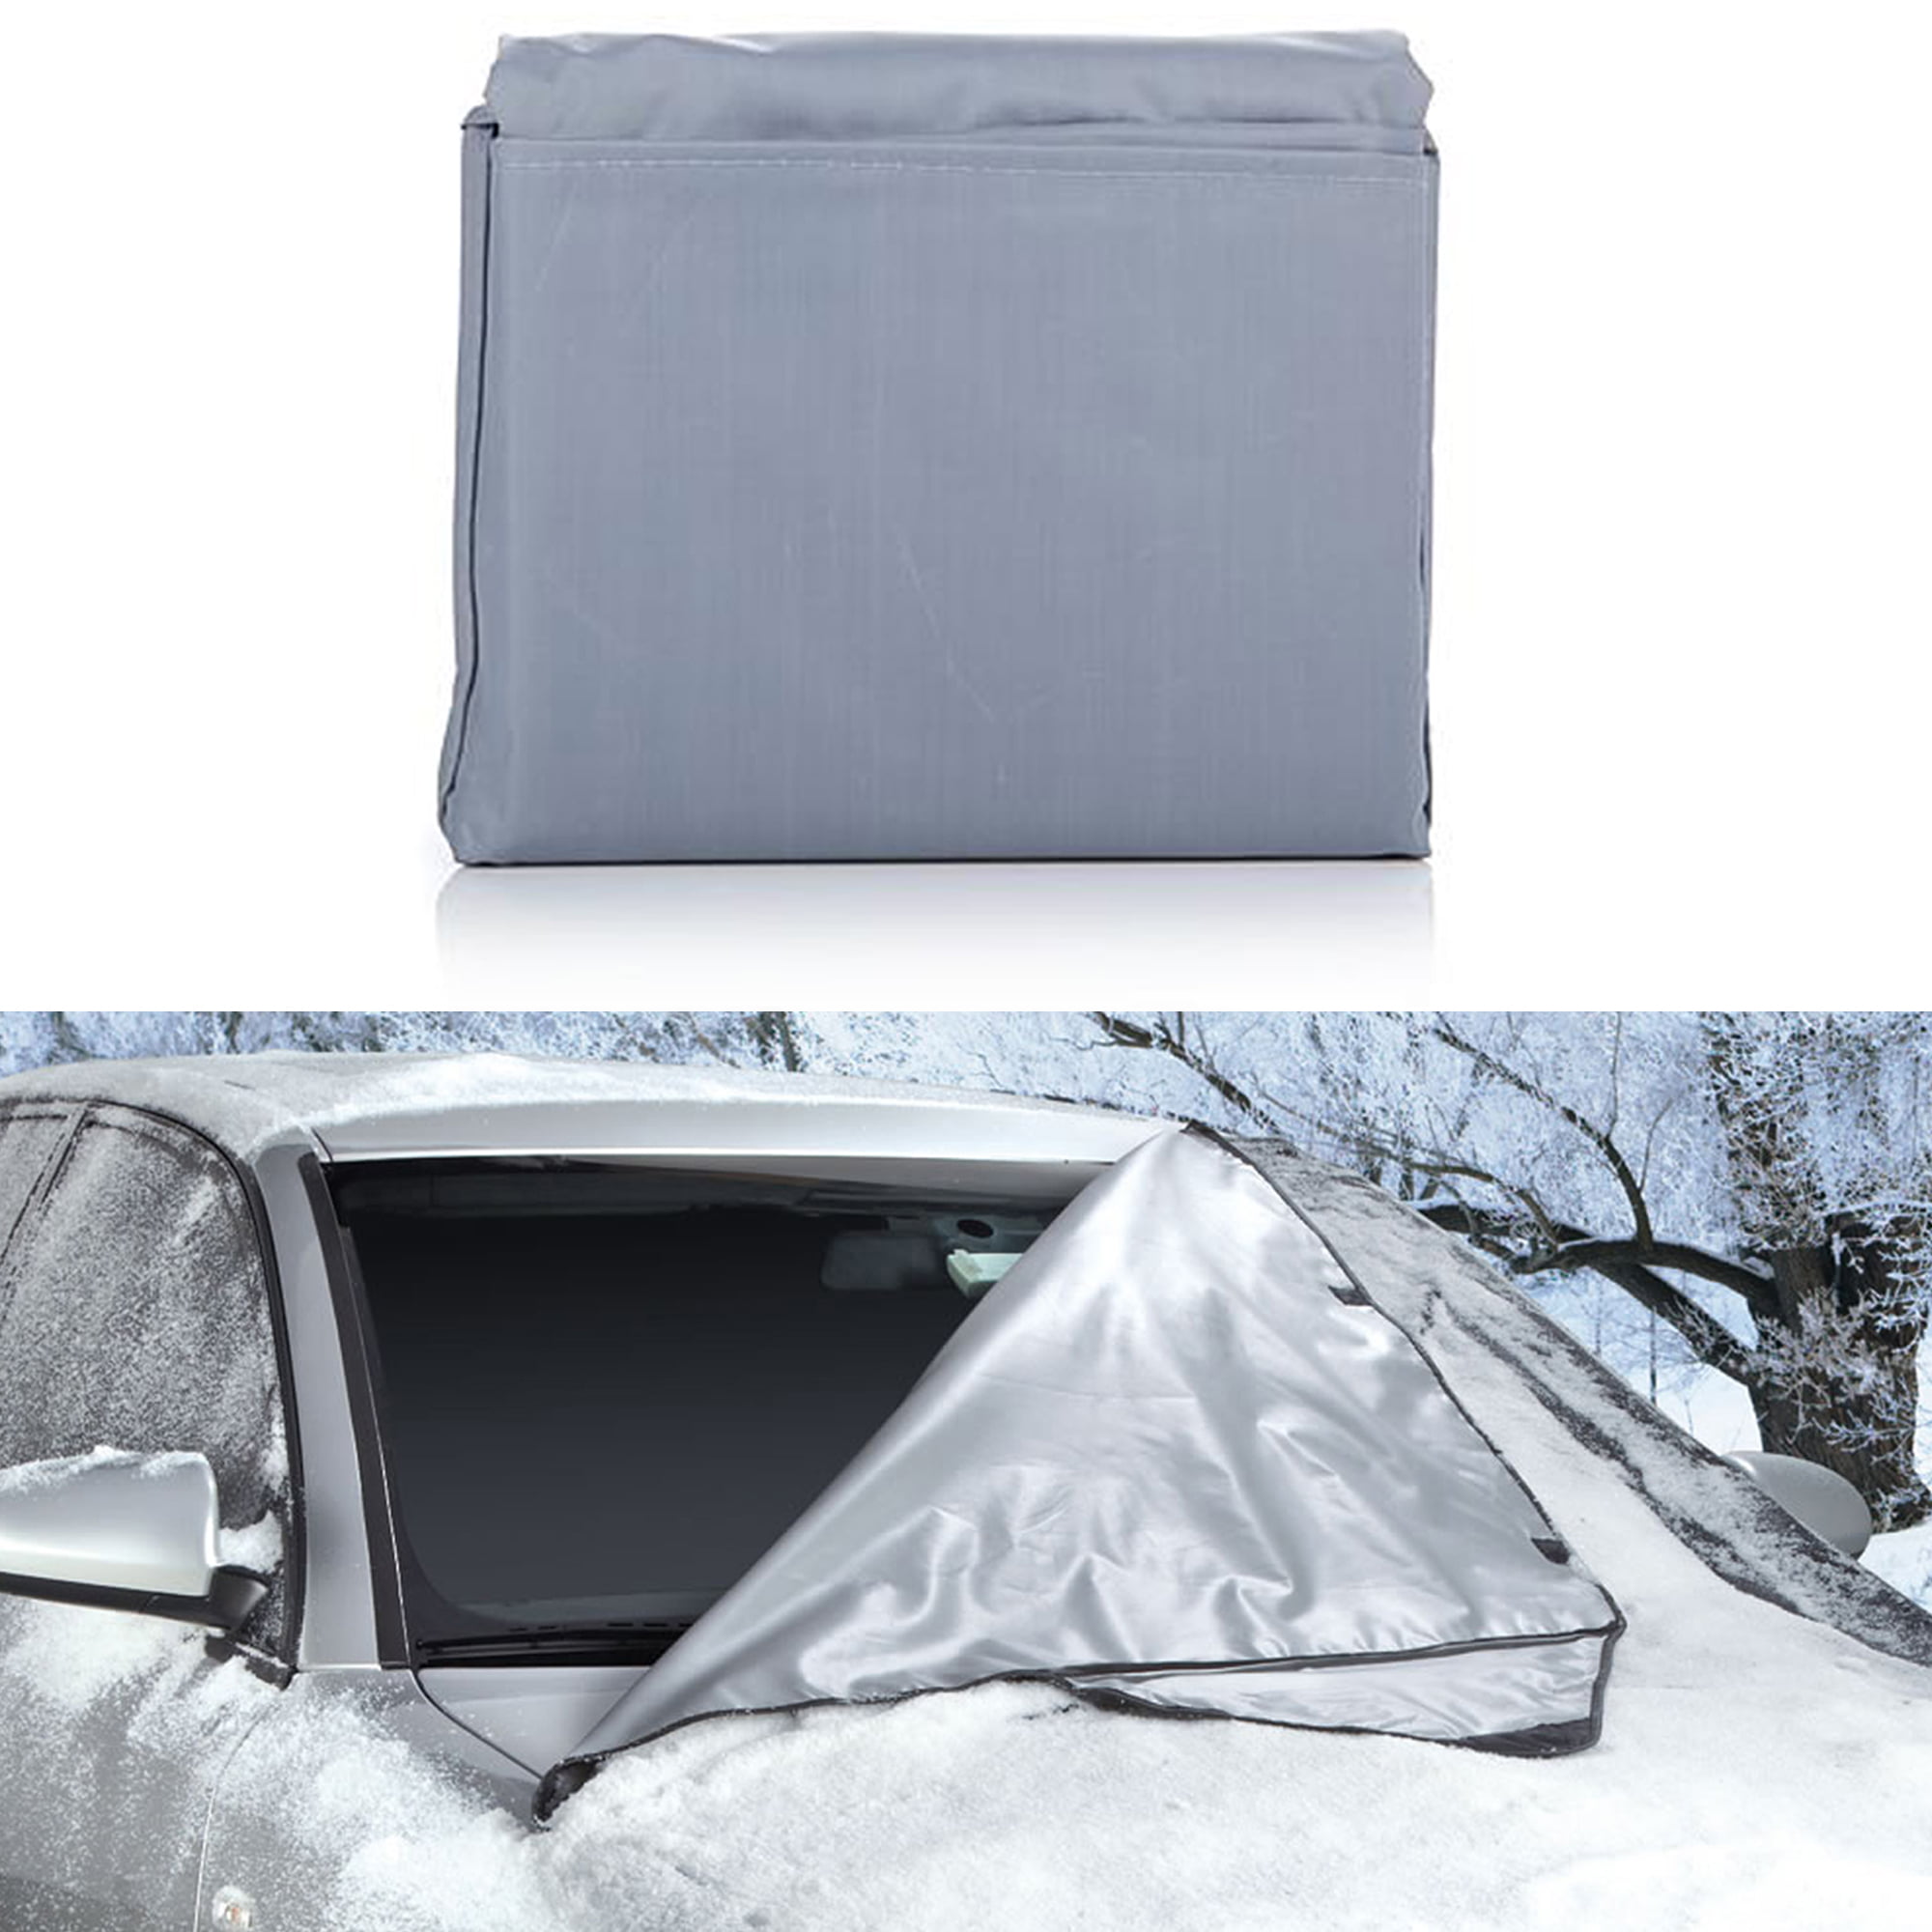 Weathershield Windshield Wrap - Car Snow Cover (58.5” x 39” x 65